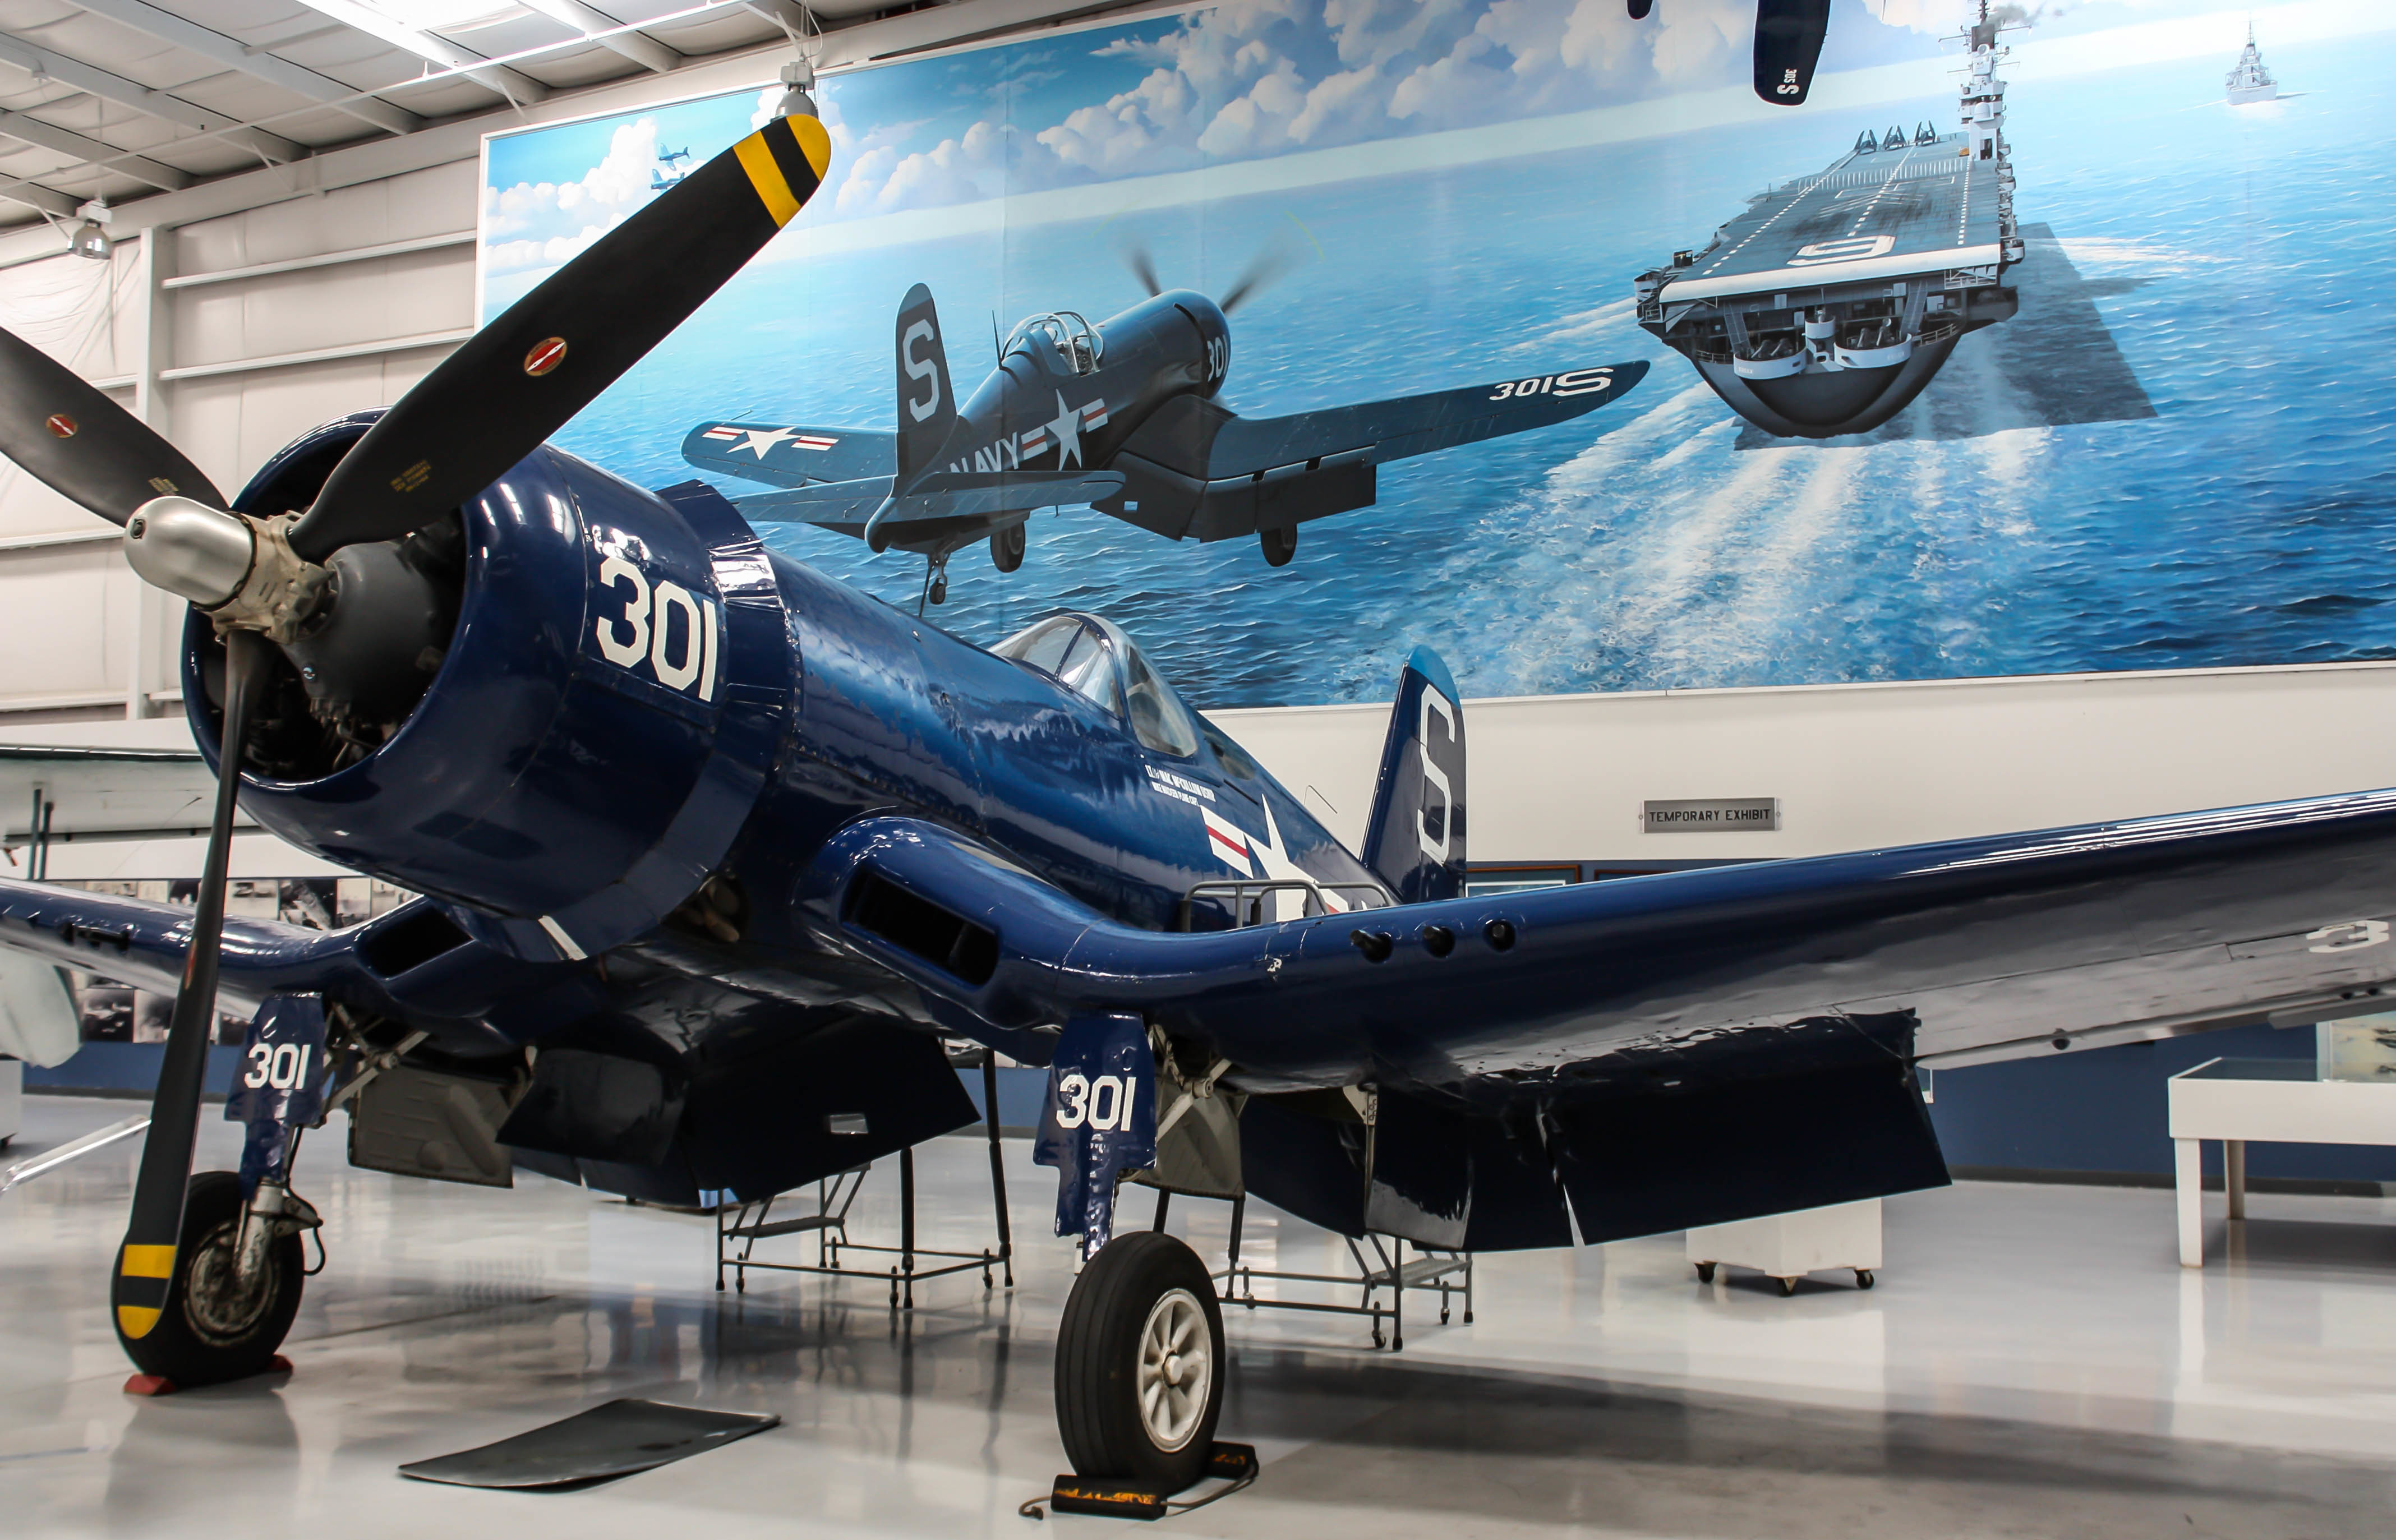 Aircraft Museum Vought F4u Corsair Warplane 4272x2746